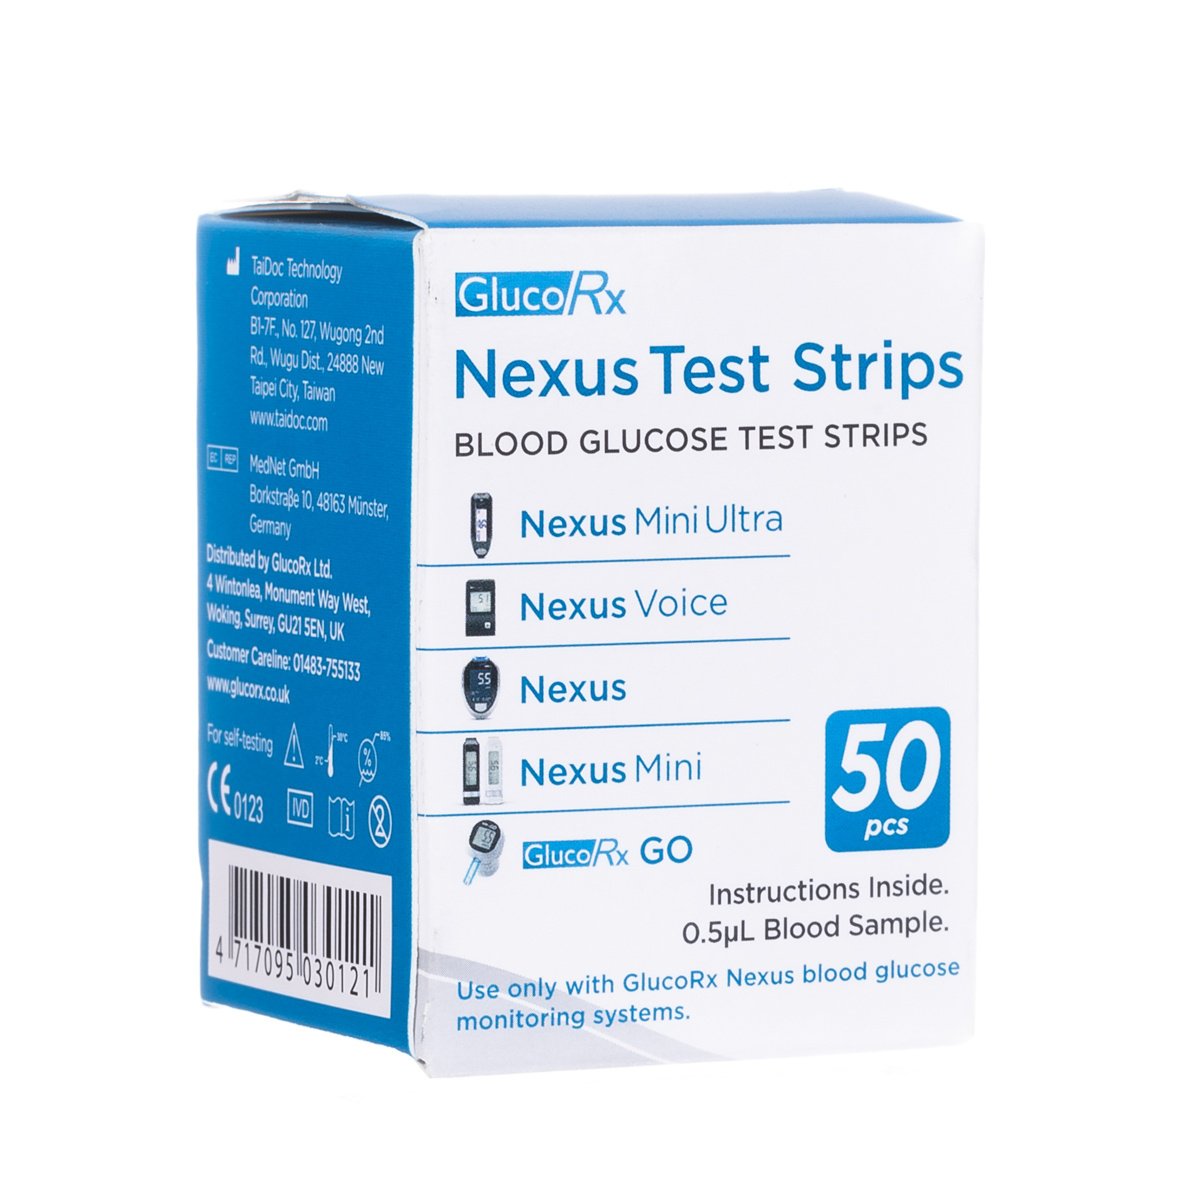 GlucoRx Nexus Test Strips